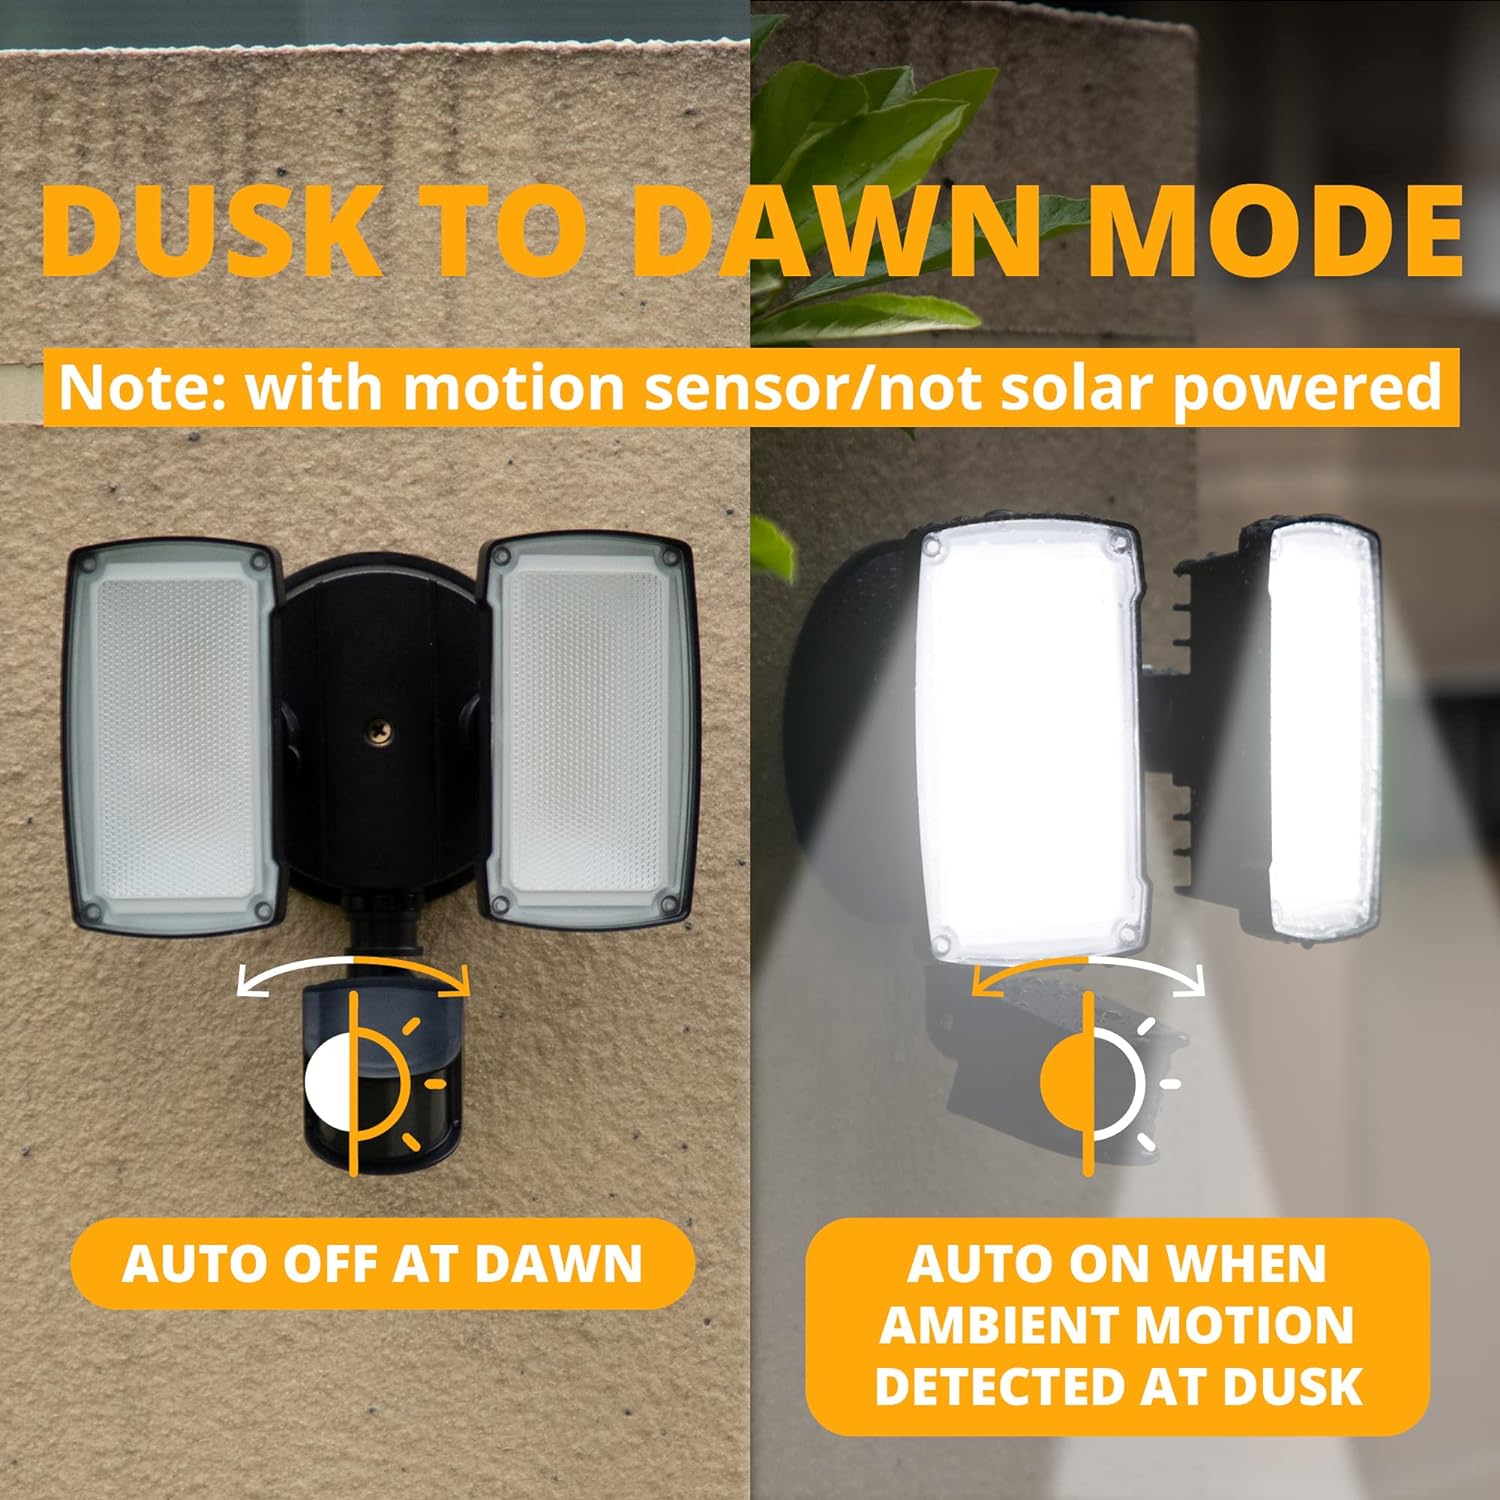 UMe 19W LED Flood Light Motion Sensor Outdoor, 2 Adjustable Head, 2000LM, 5000K, IP65 Waterproof, Dusk to Dawn Security Light with